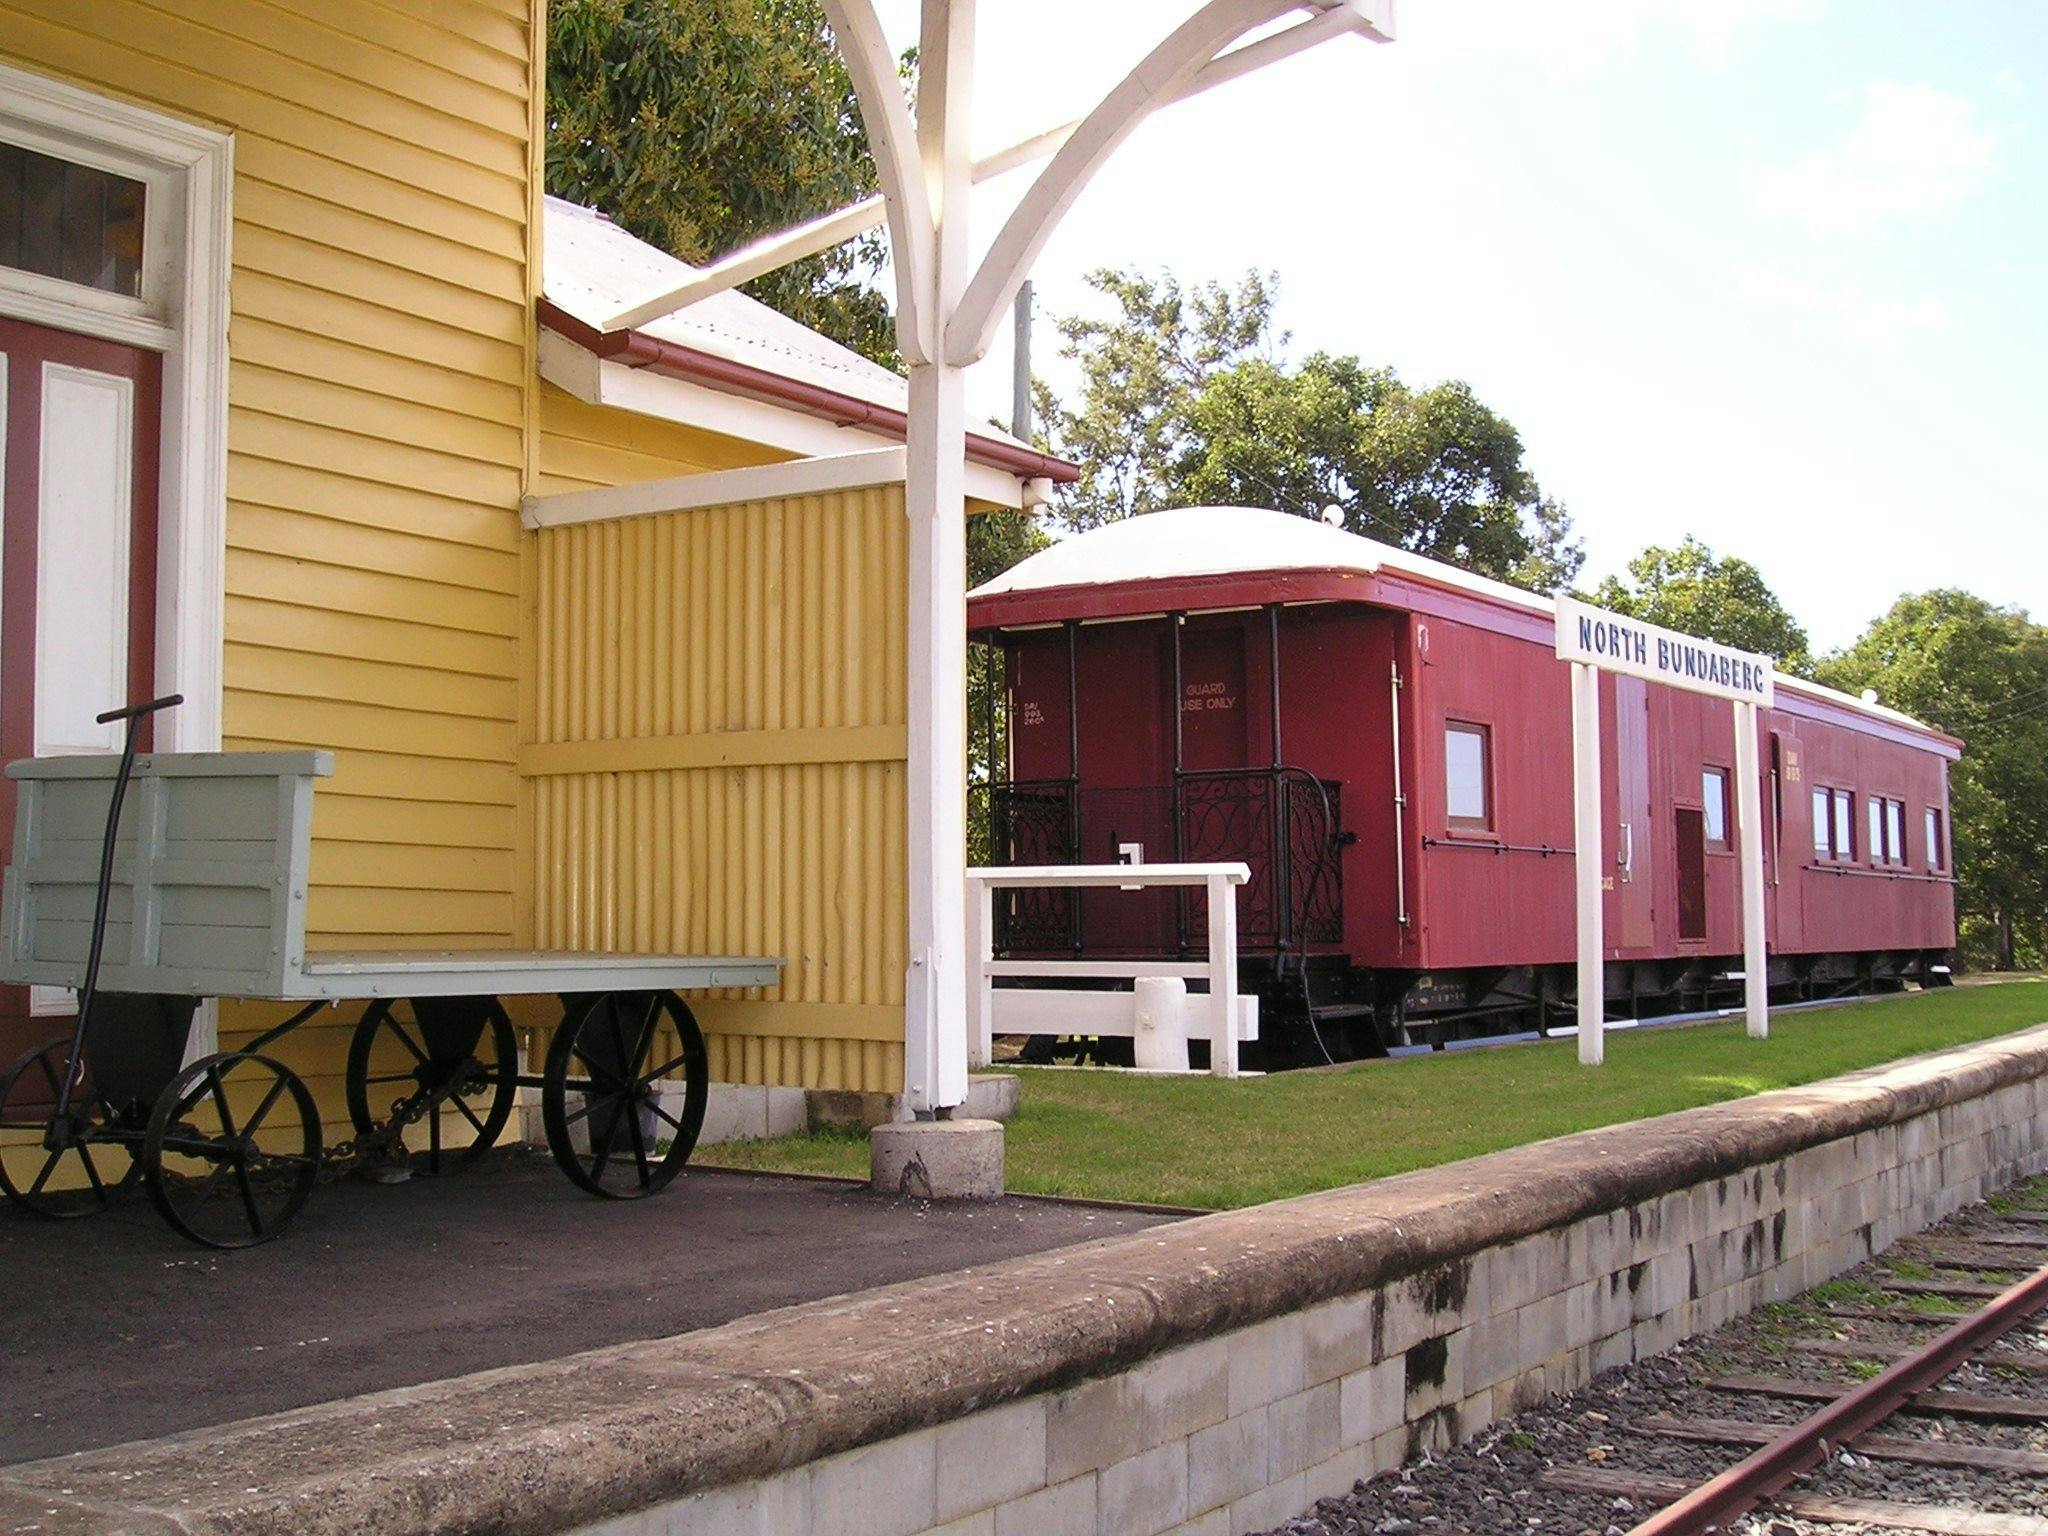 Bundaberg Railway Museum